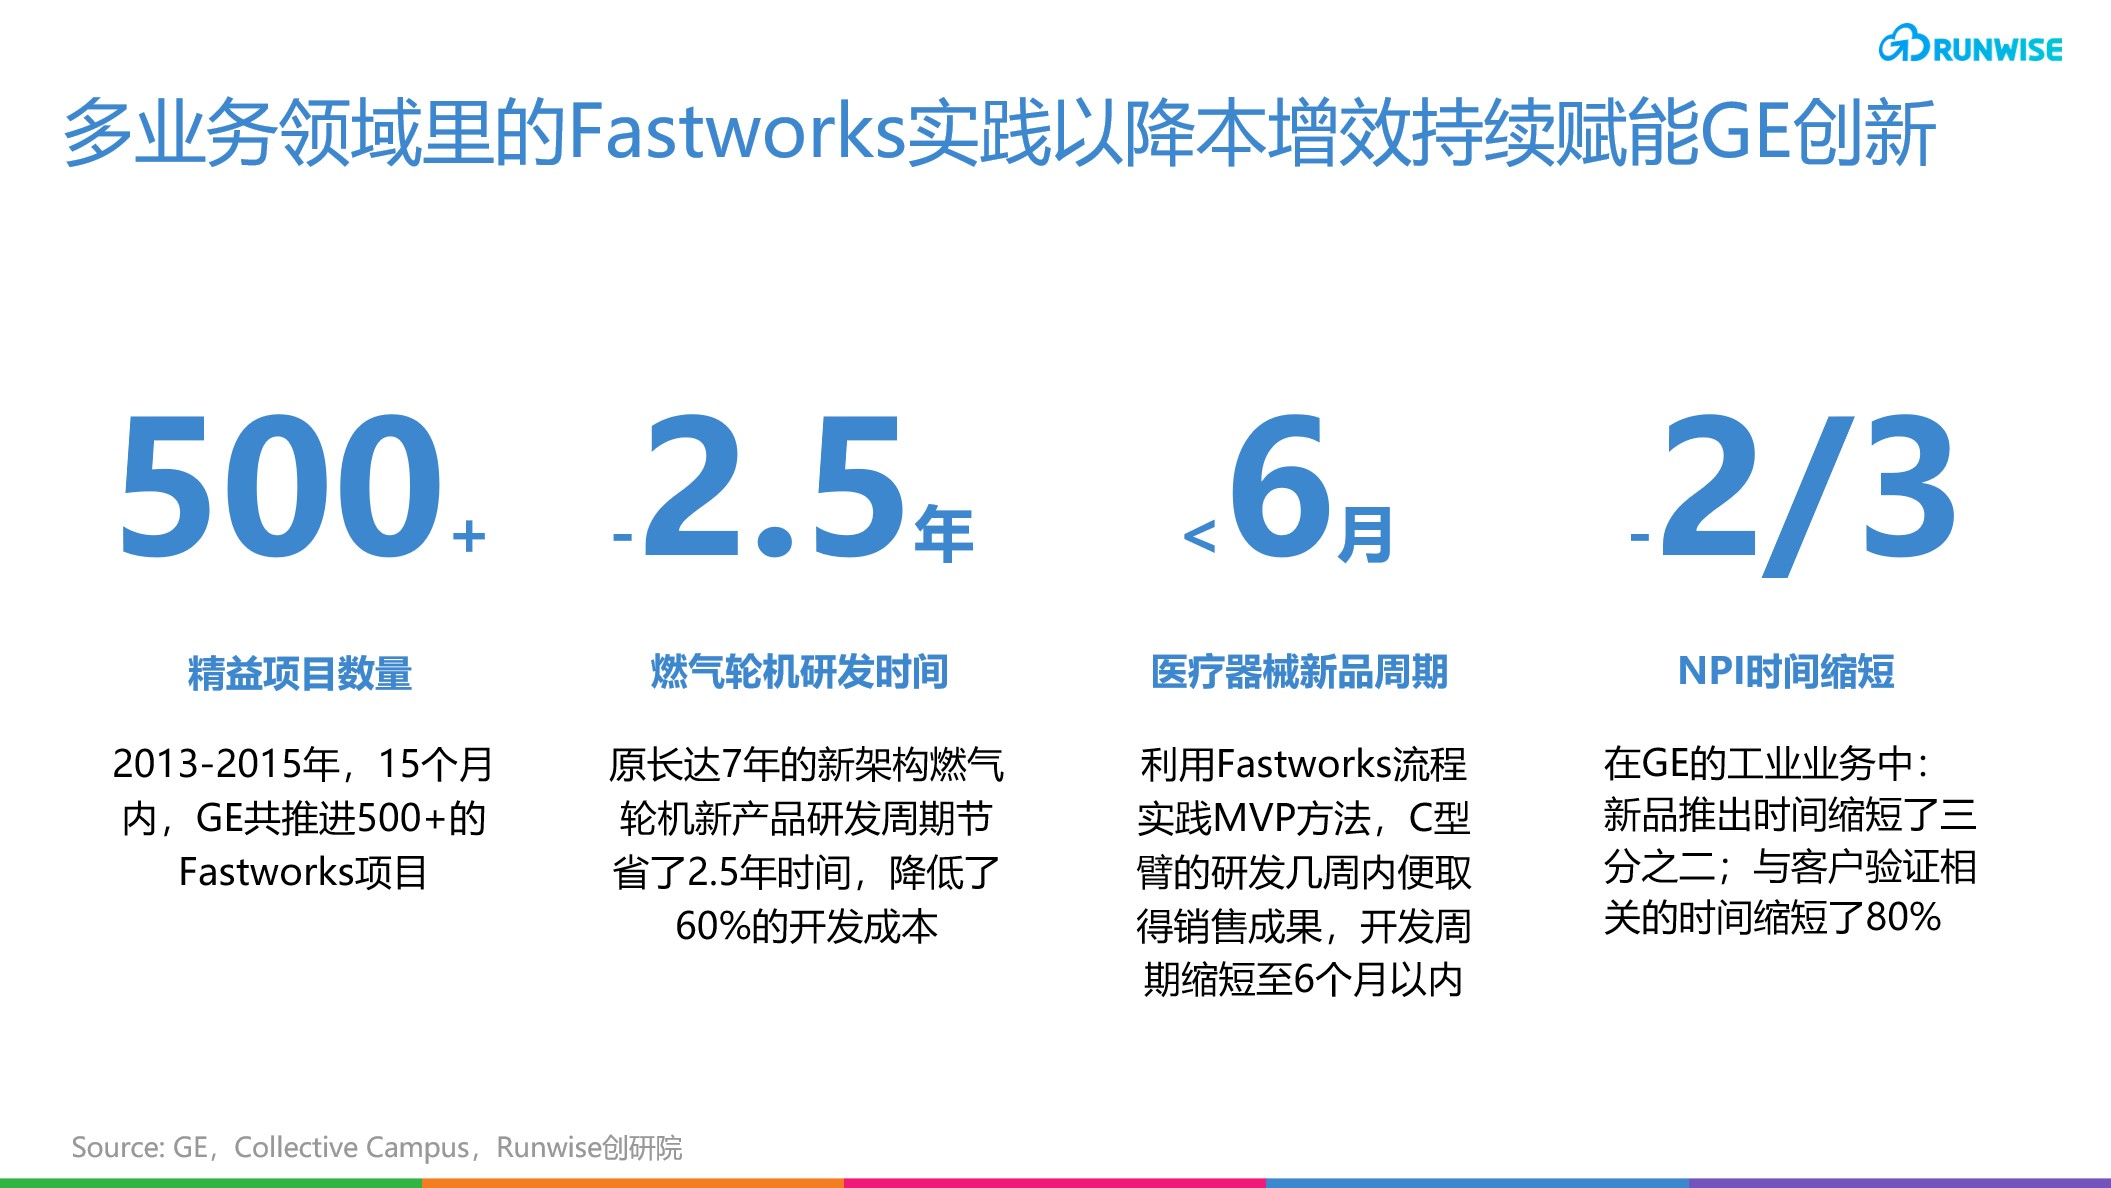 GE Fastworks - 创新成效